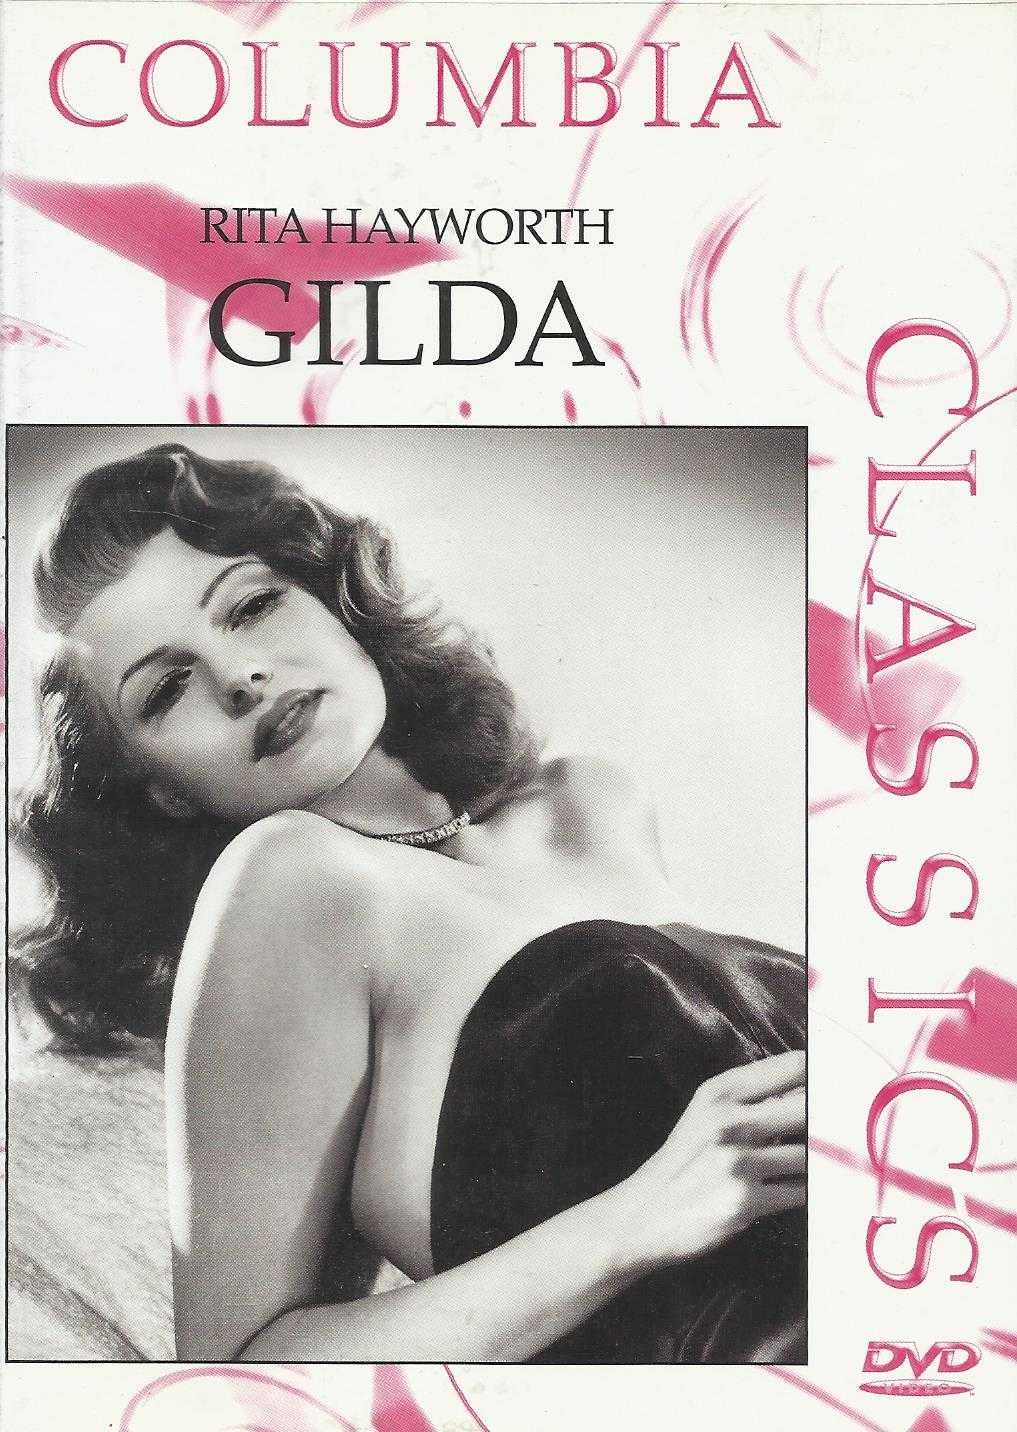 GILDA (1946) Rita Hayworth Columbia DVD polska edycja